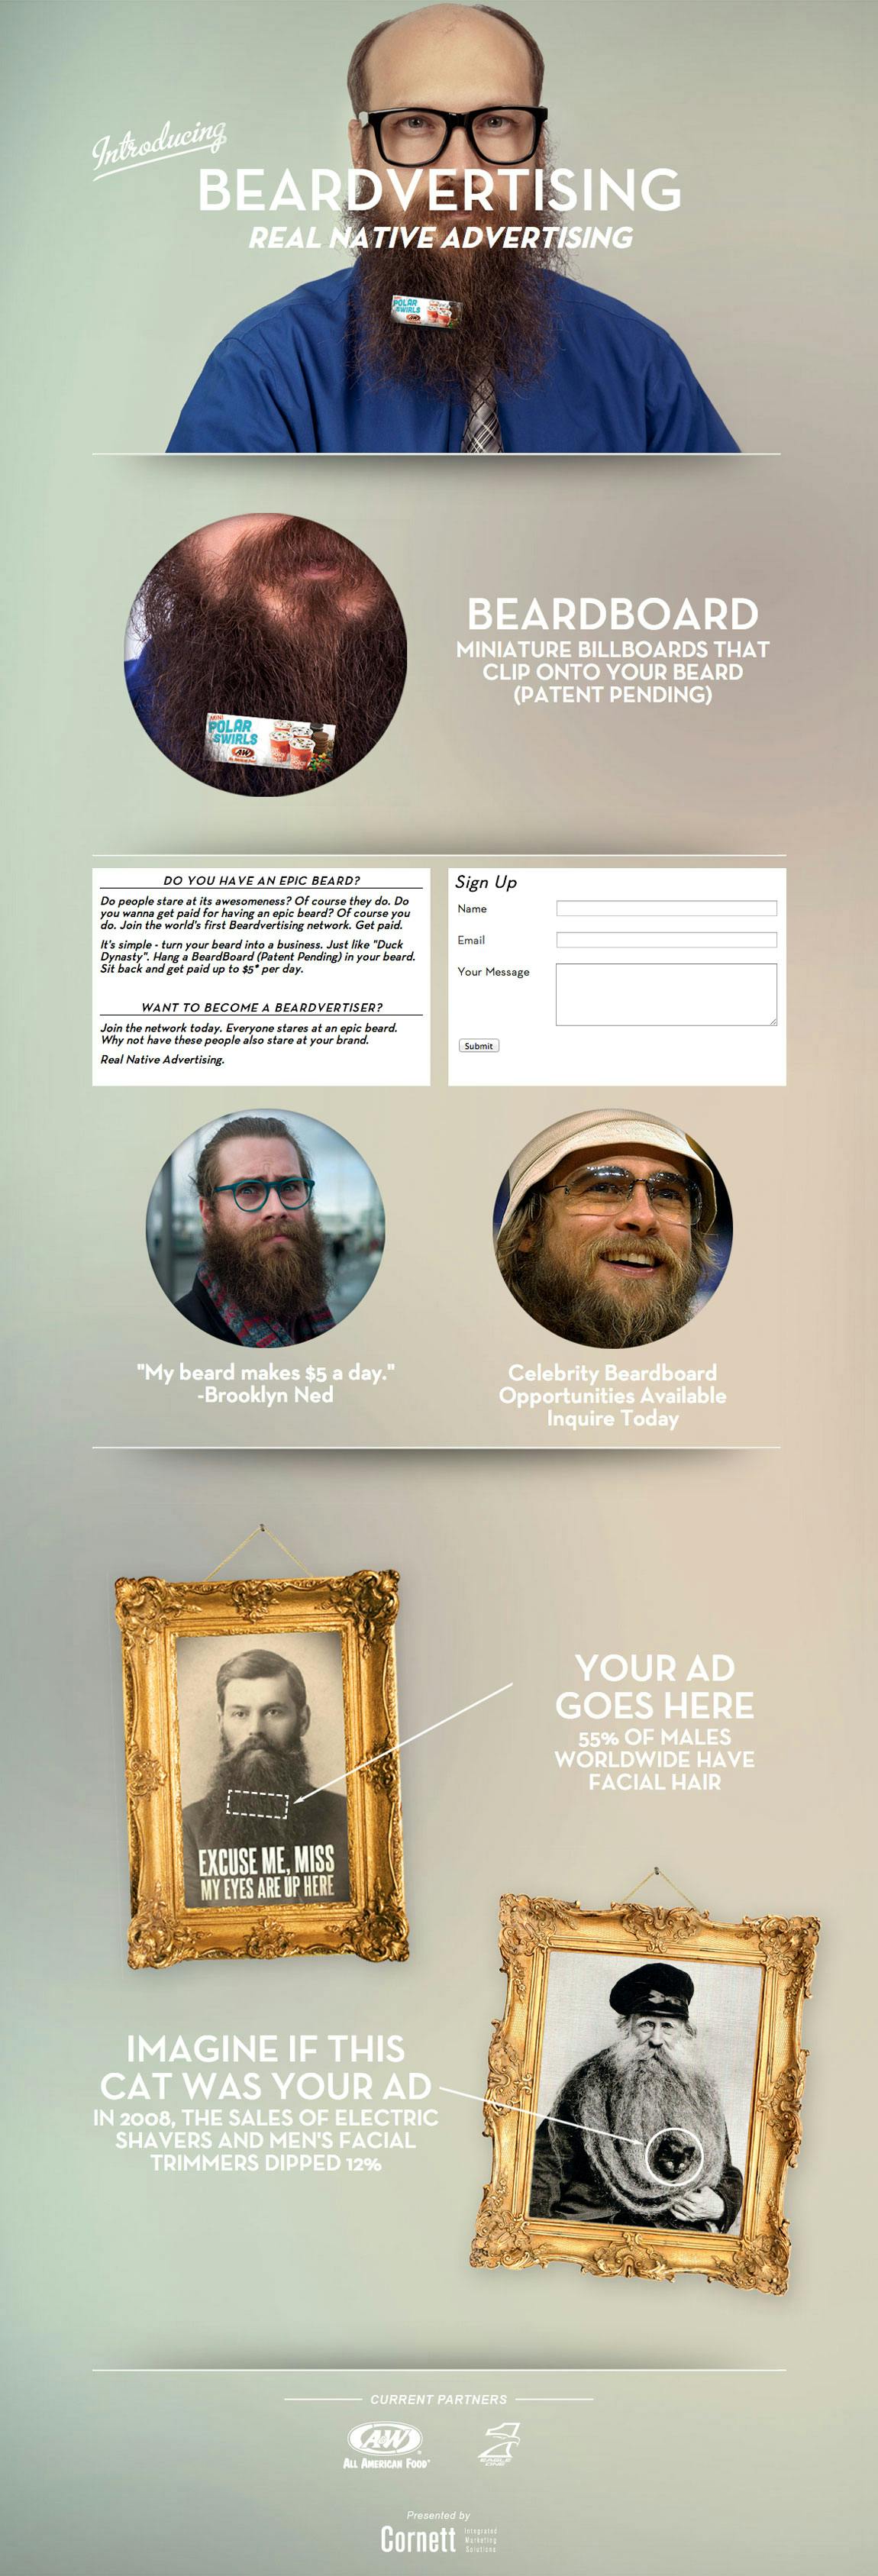 Beardvertising Website Screenshot